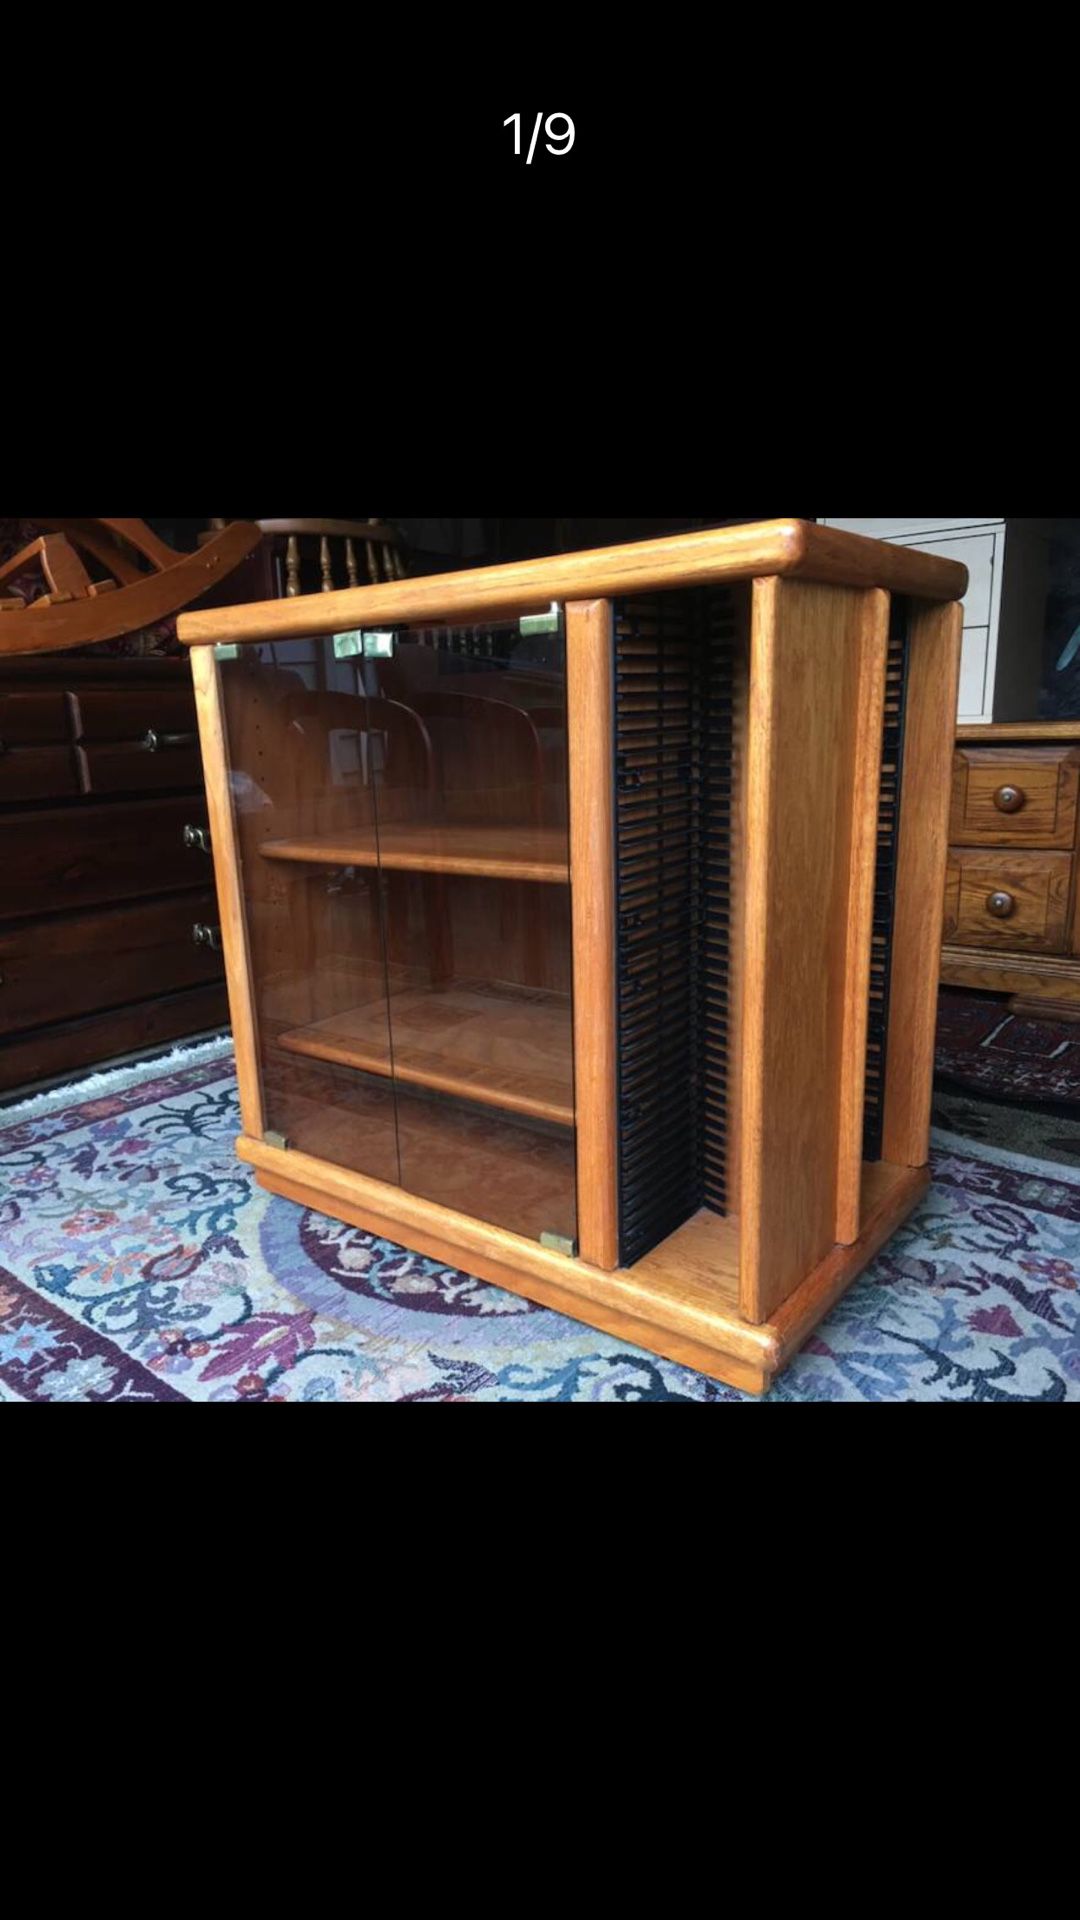 LOCAL DELIVERY INCLUDED - Vintage Media Cabinet On Wheels, w CD storage - Oakwood - 30Hx30Lx17D 2 adjustable/removable shelves inside